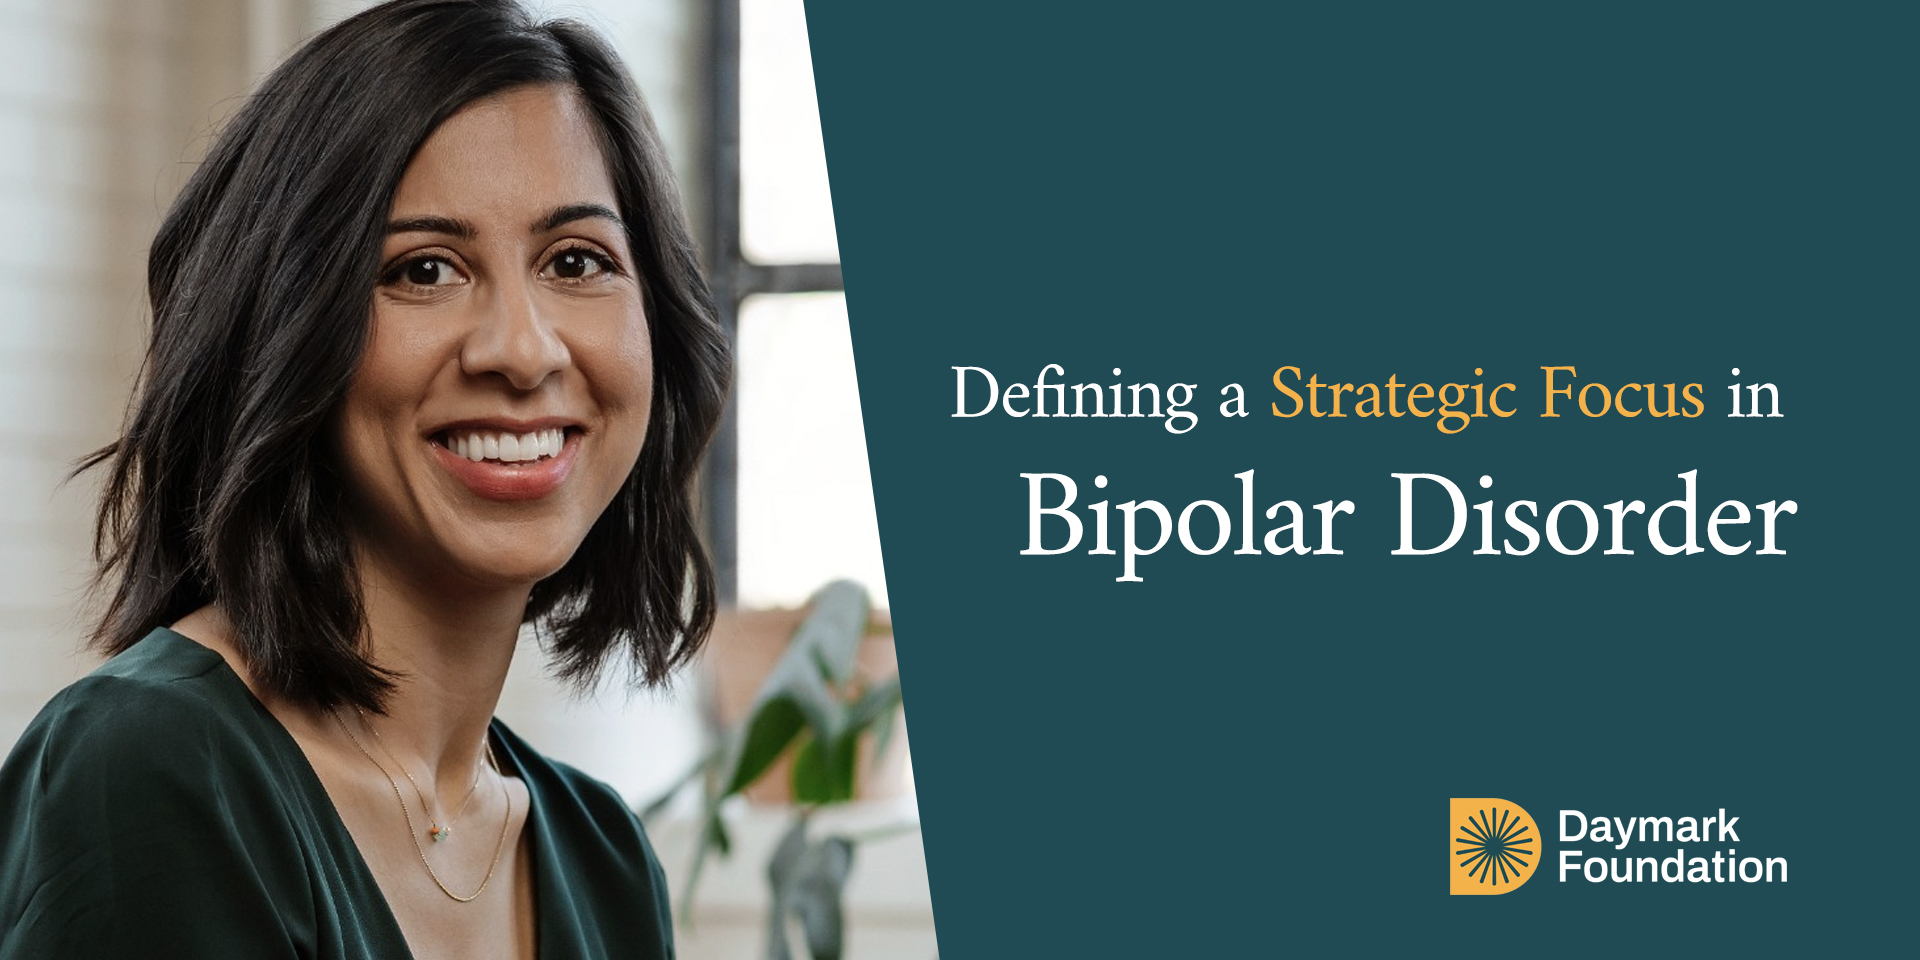 The Daymark Foundation: Defining a Strategic Focus in Bipolar Disorder